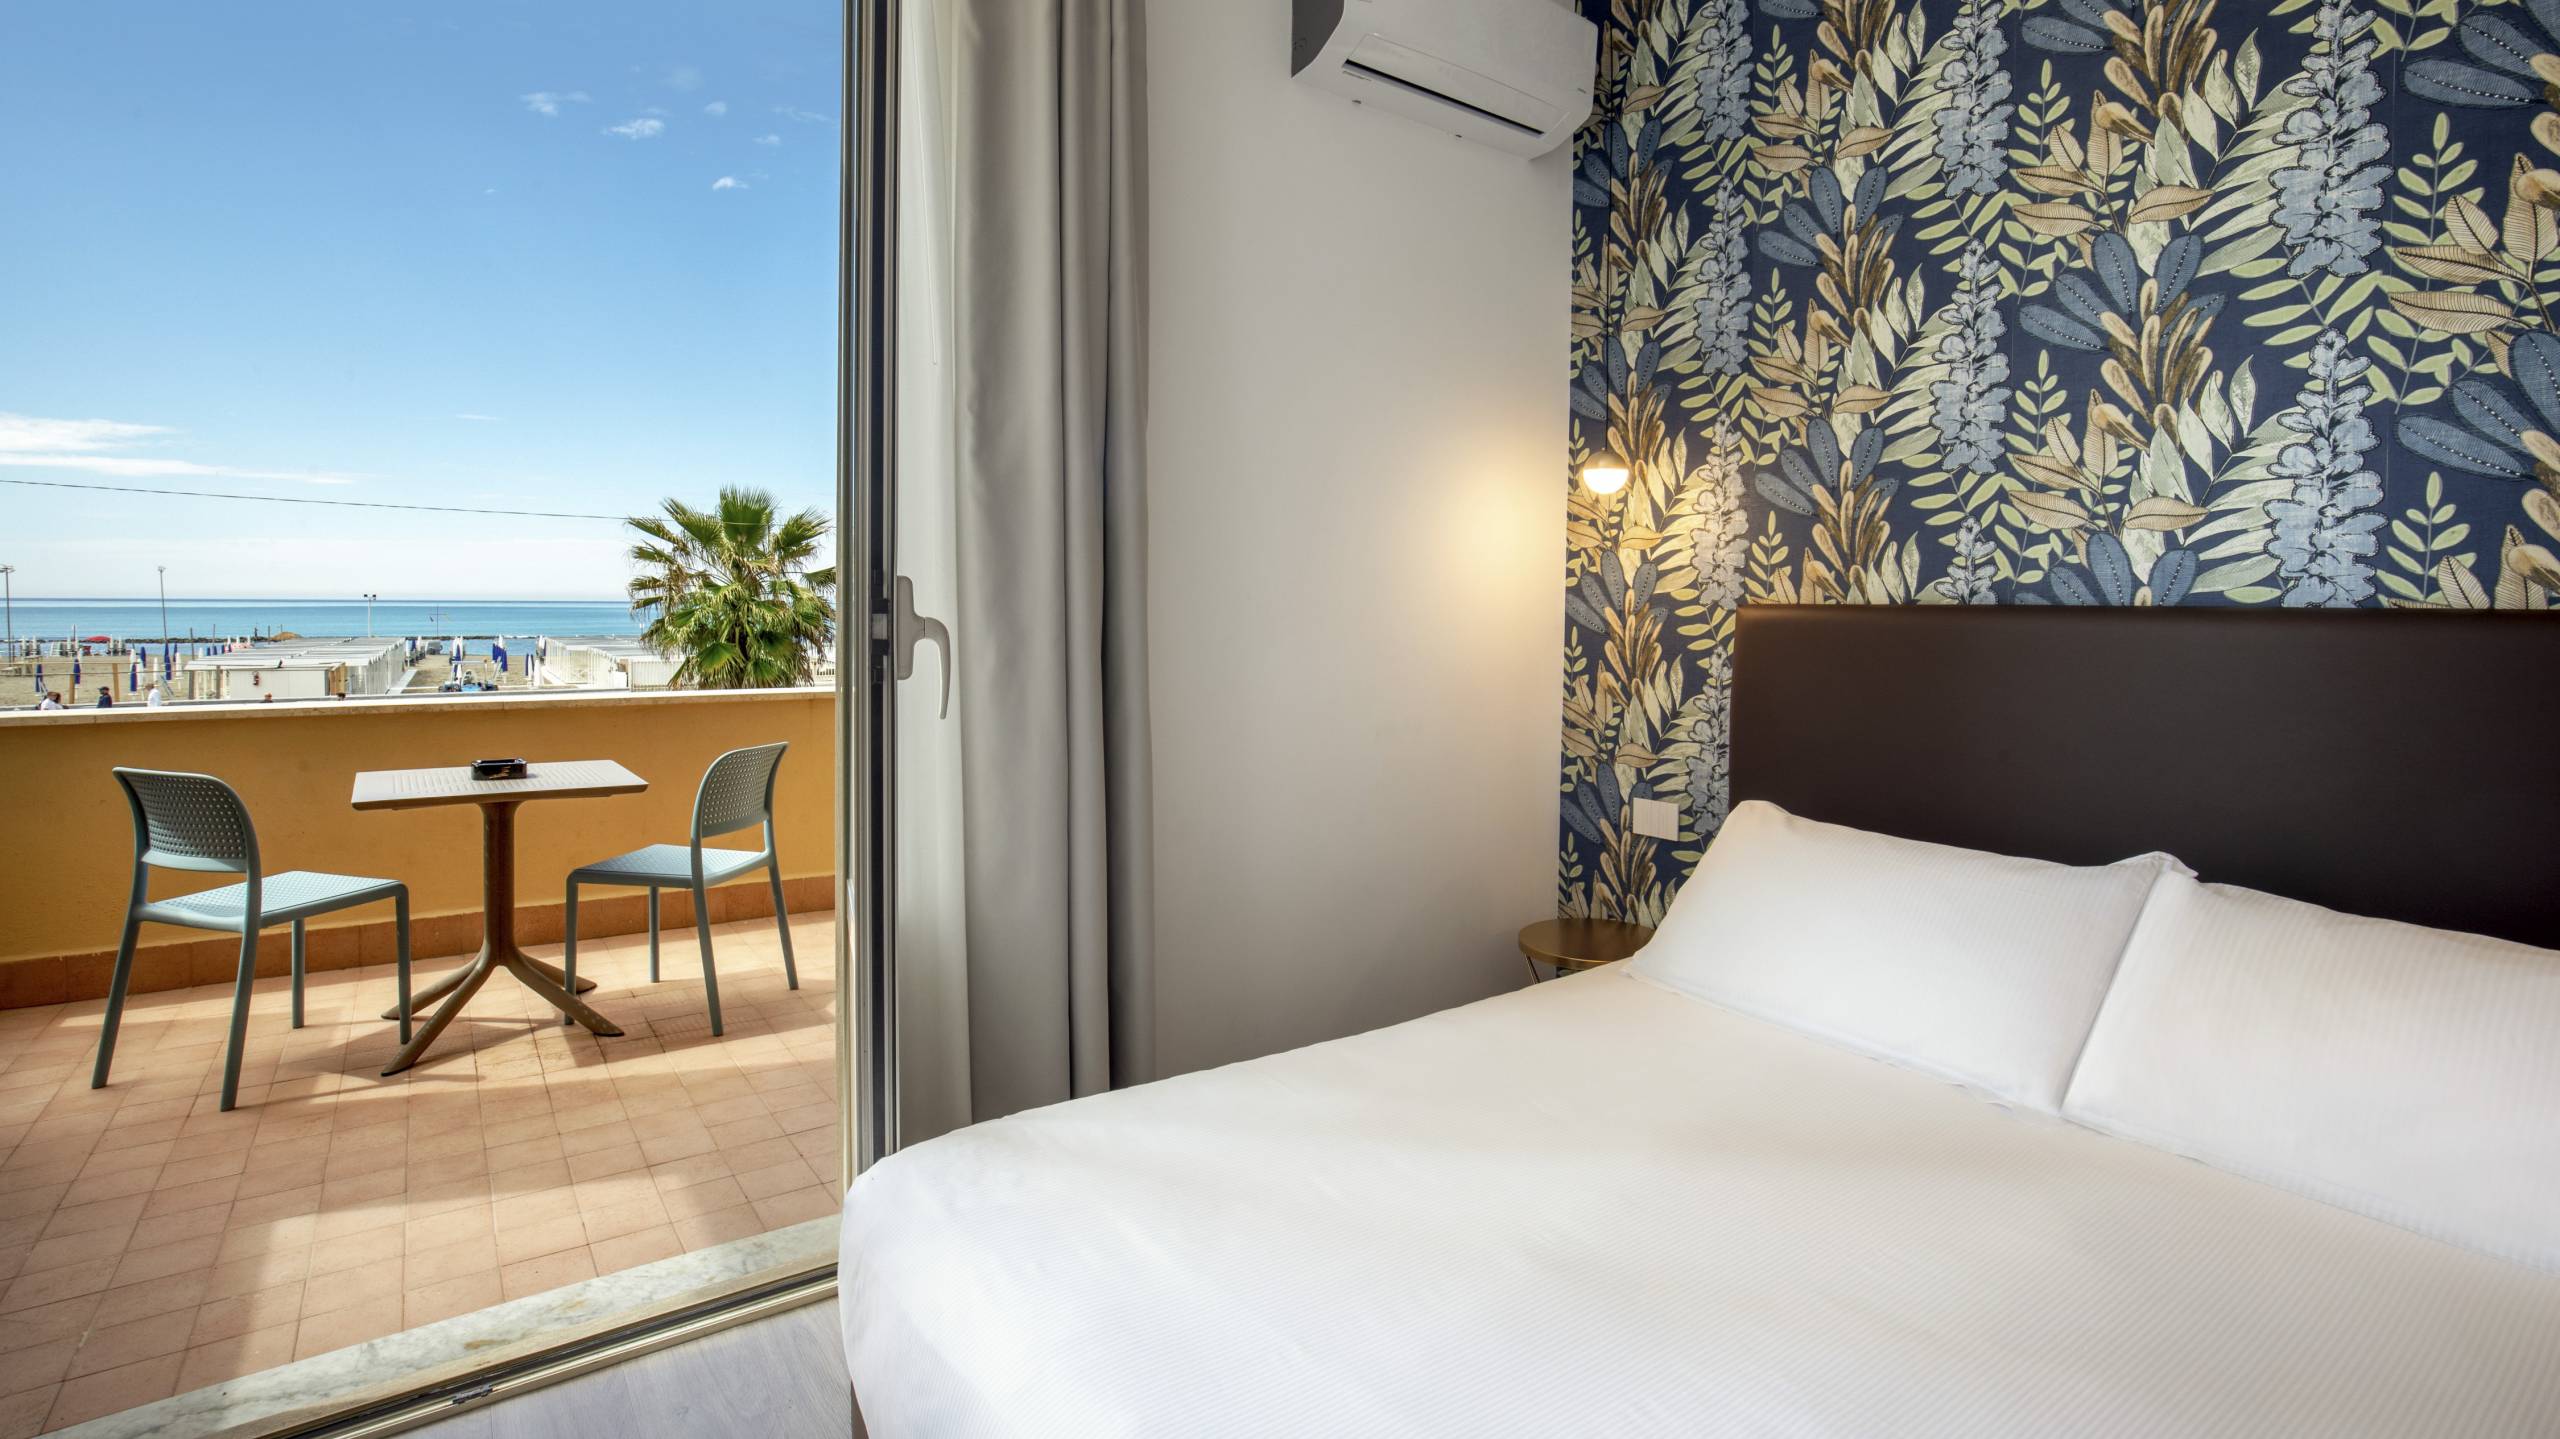 Hotel-La-Scaletta-Ostia-twin-room-with-view-30